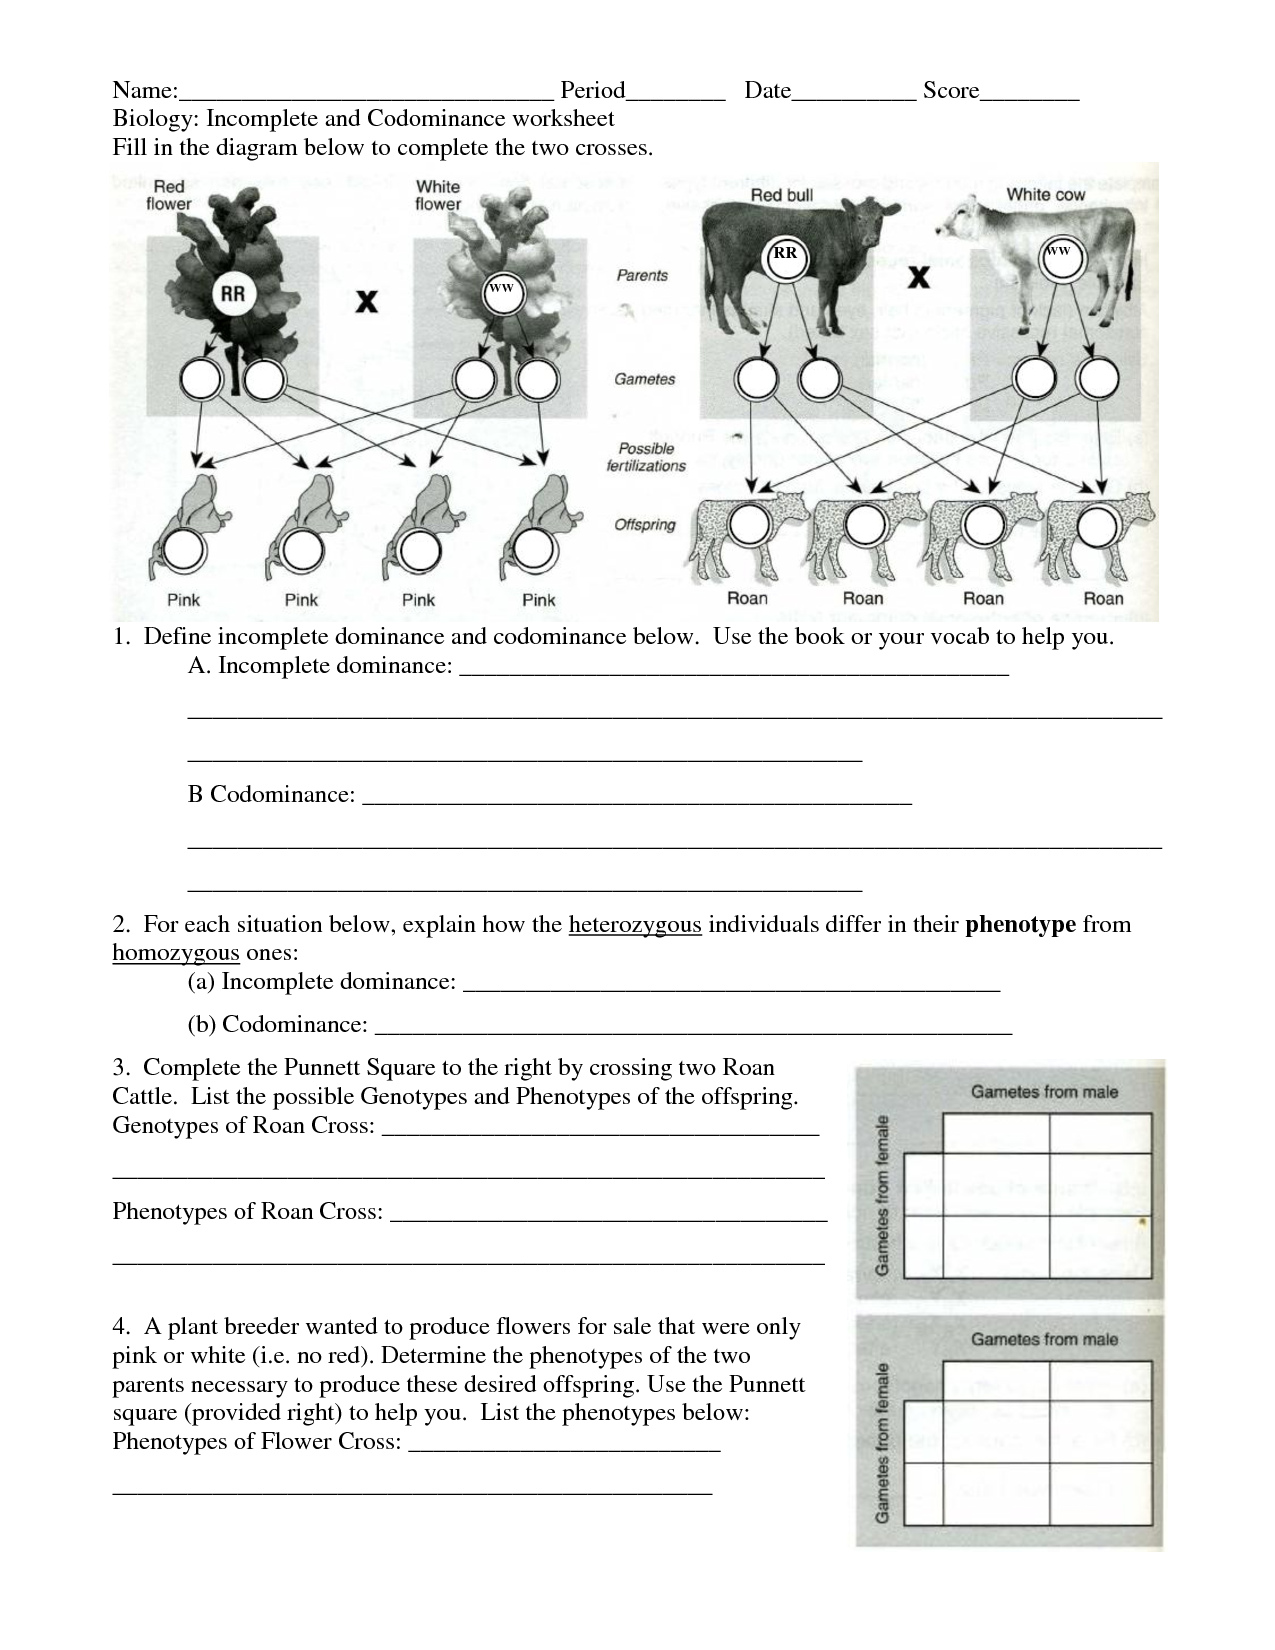 amoeba sisters incomplete dominance worksheet pdf